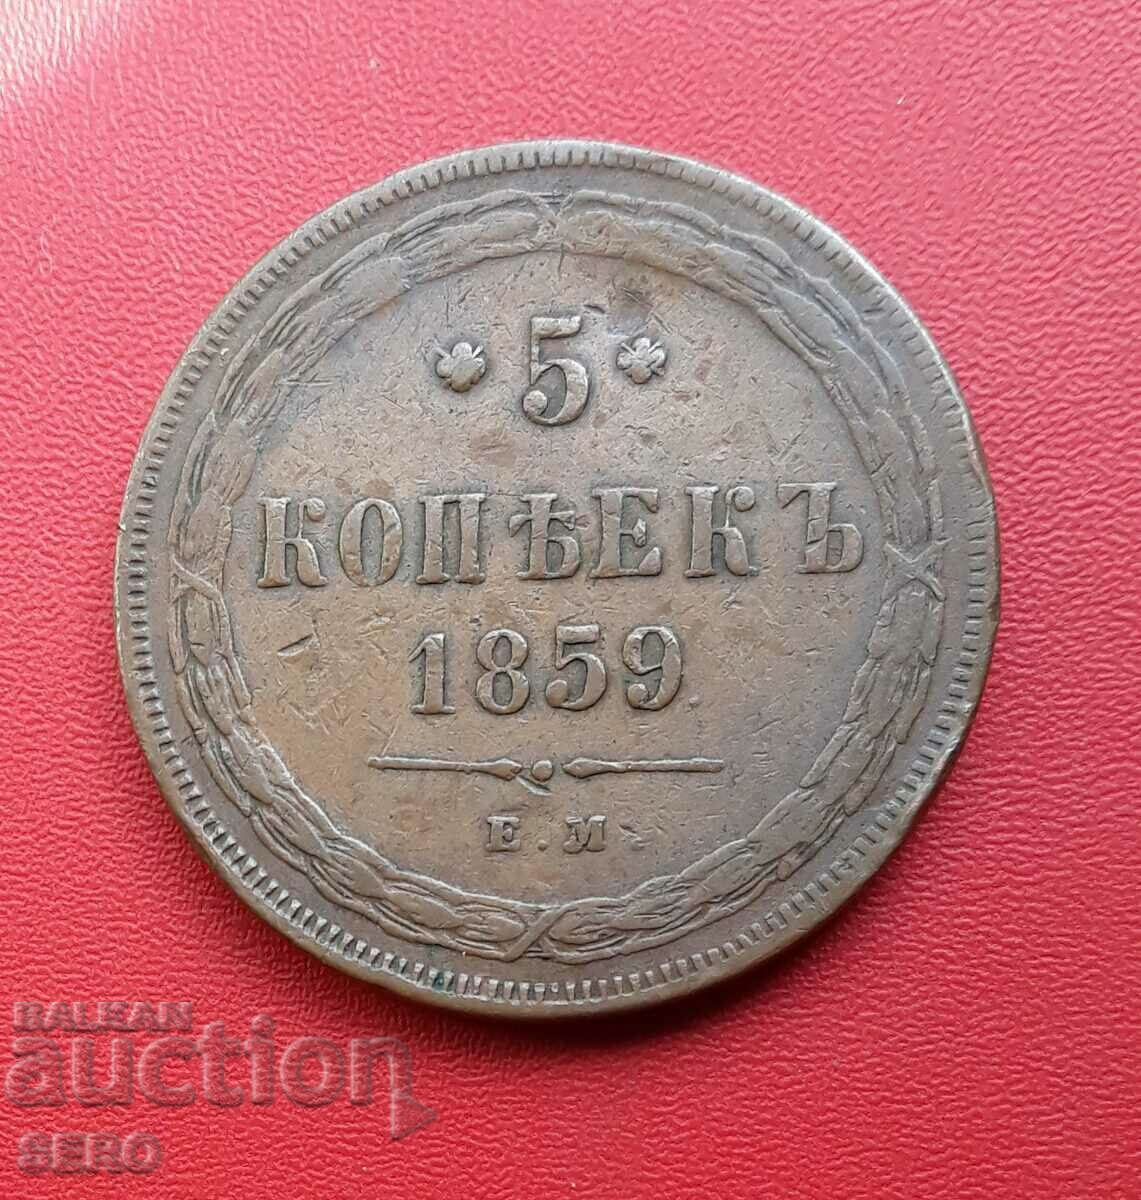 Russia-5 kopecks 1859